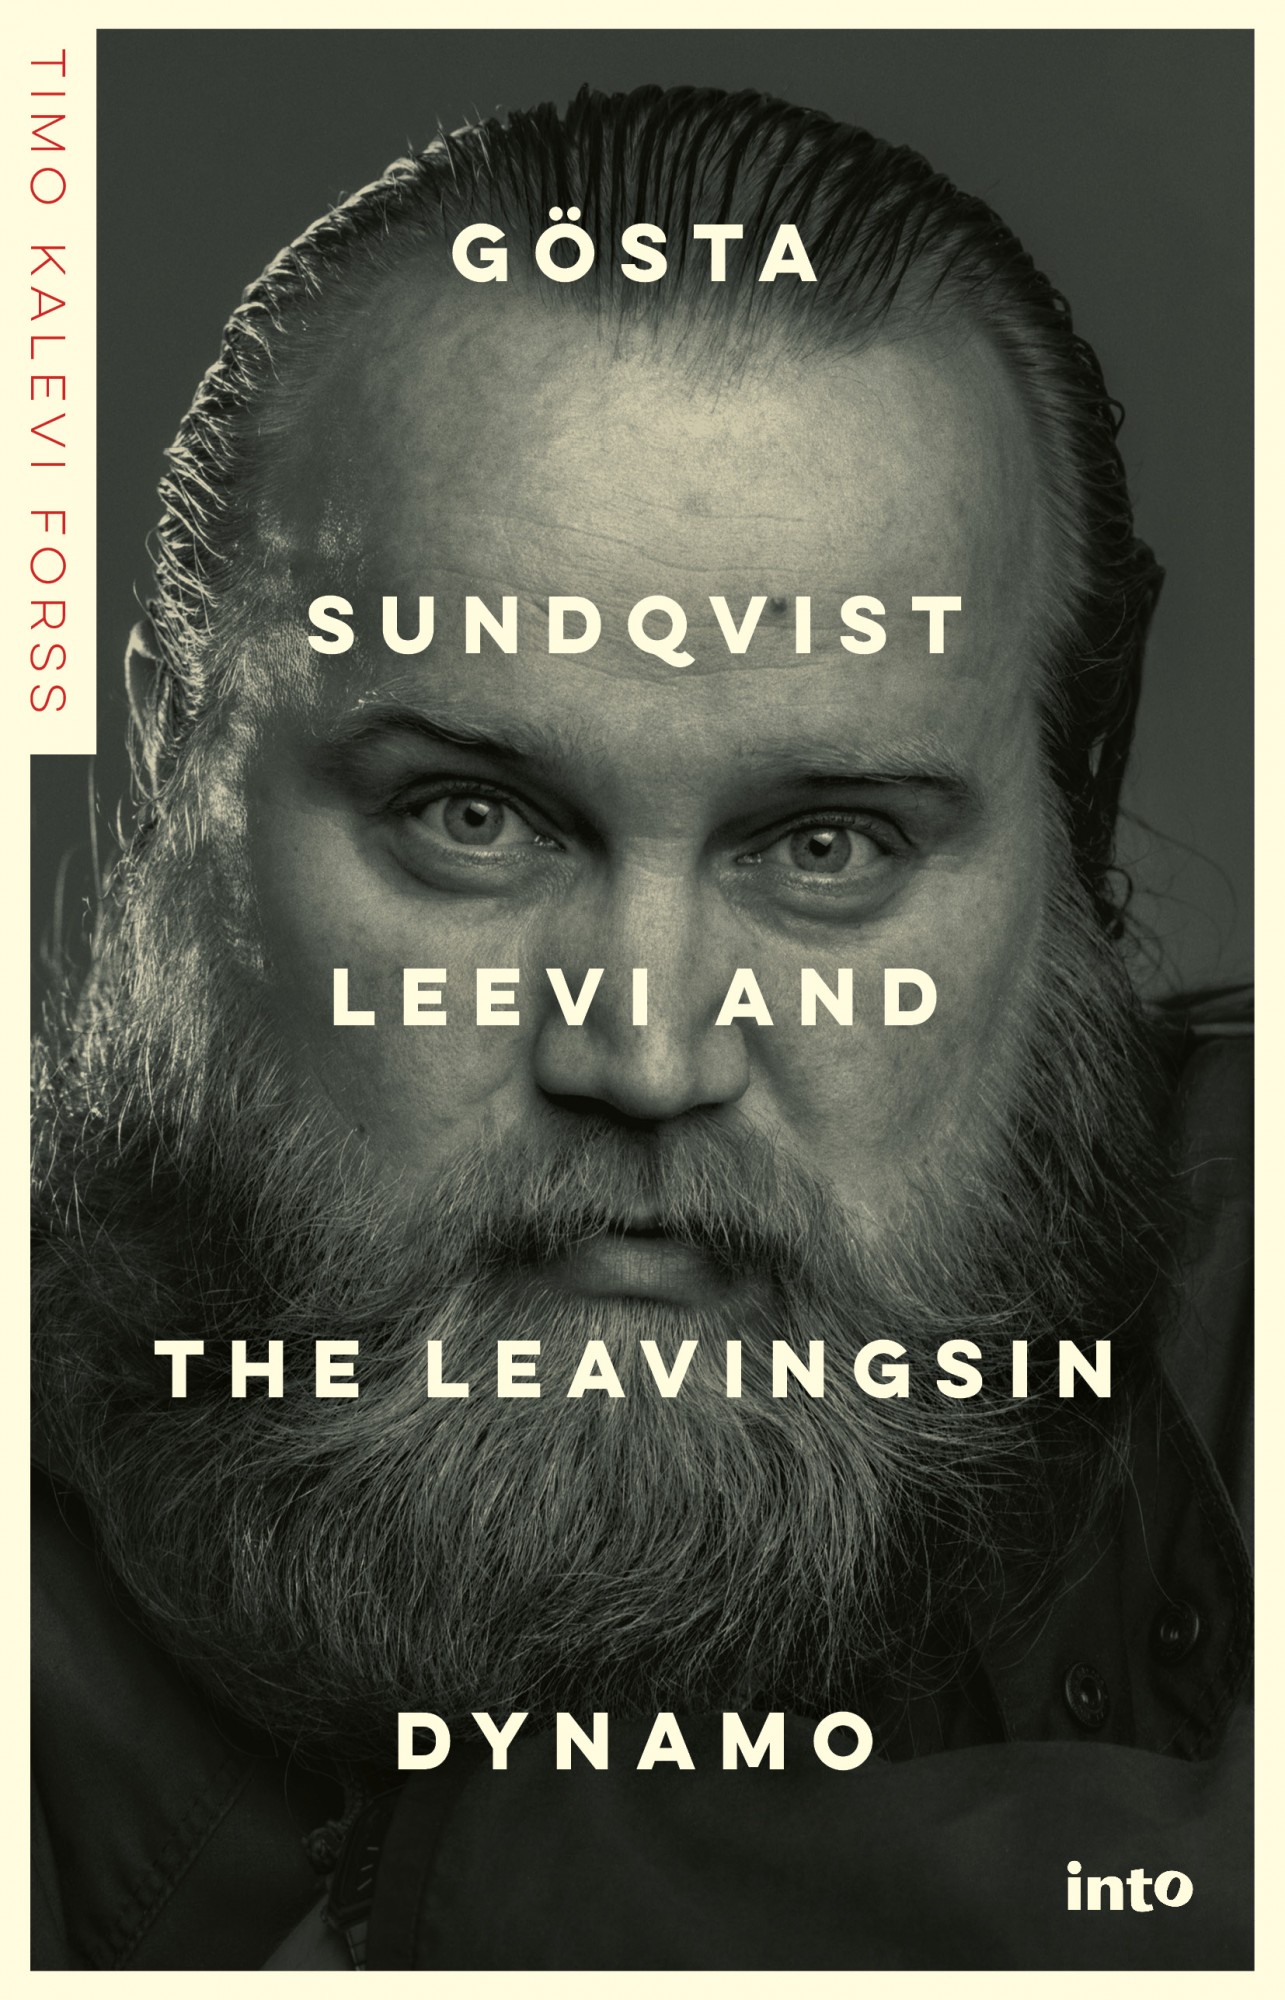 Forss, Timo Kalevi - Gösta Sundqvist: Leevi and the Leavingsin dynamo, e-kirja